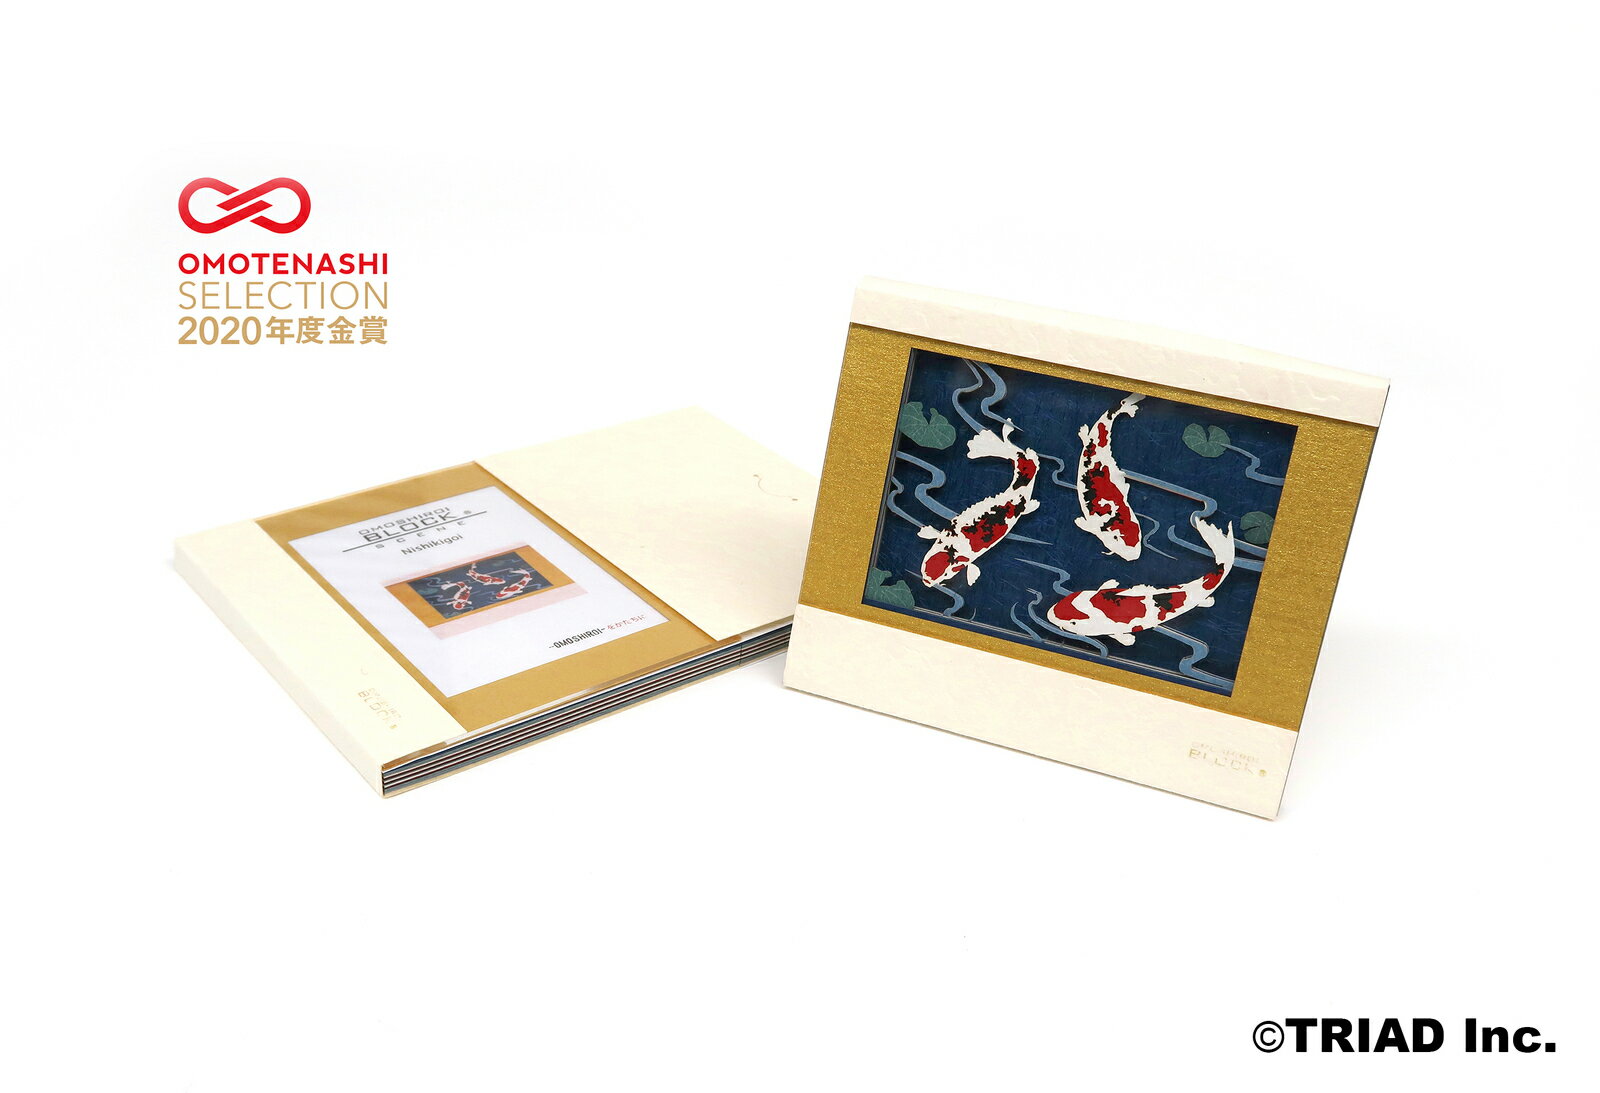 Nishikigoi 公式 OMOSHIROIBLOCK メモ帳 立体メモ 収納ケース付き 飾り物 インテリア プレゼント